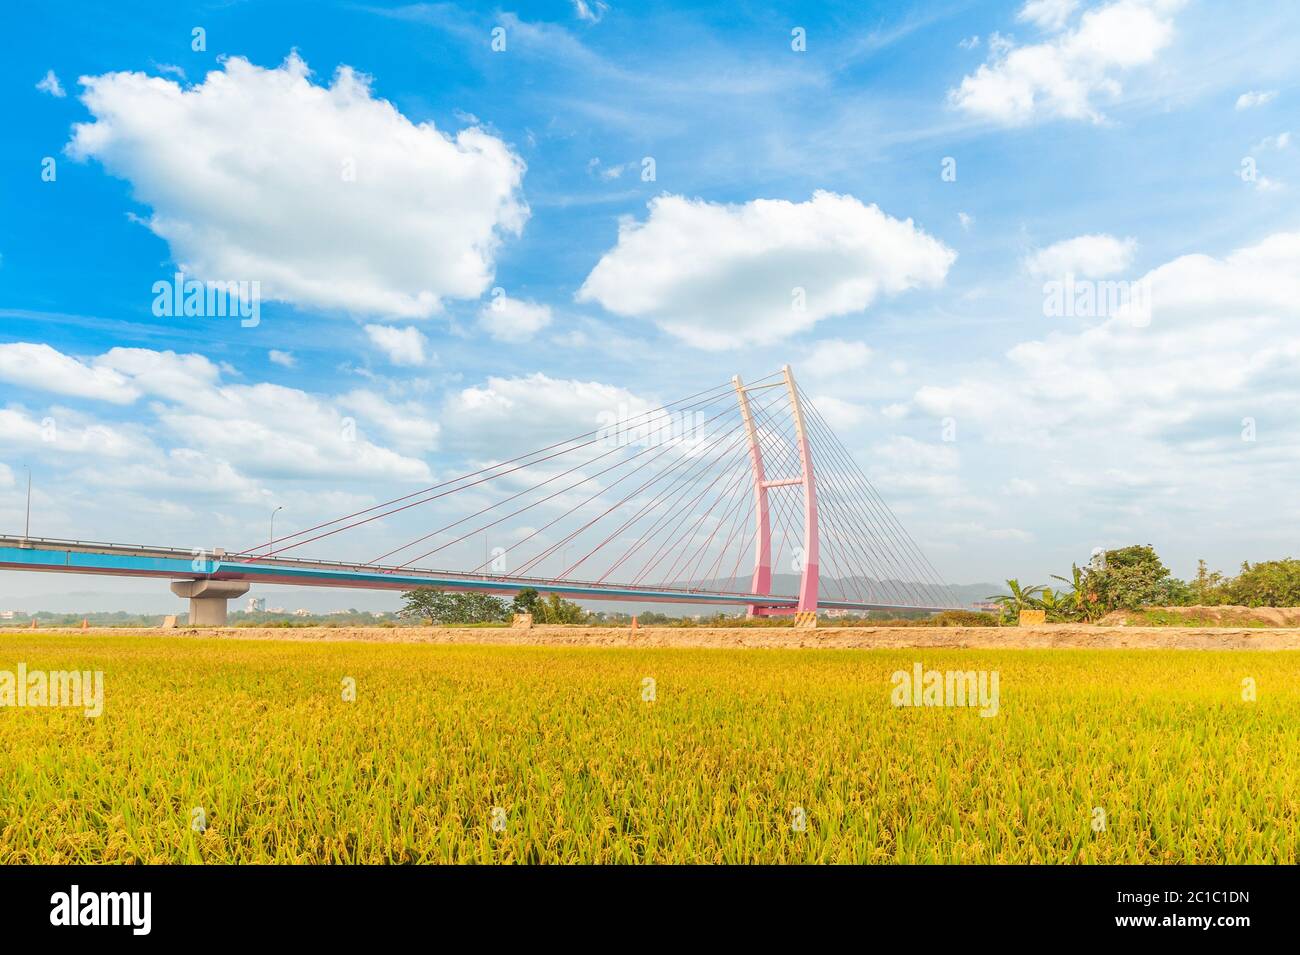 Taiwans höchste Kabelbrücke blieb in Zhubei, Taiwan Stockfoto